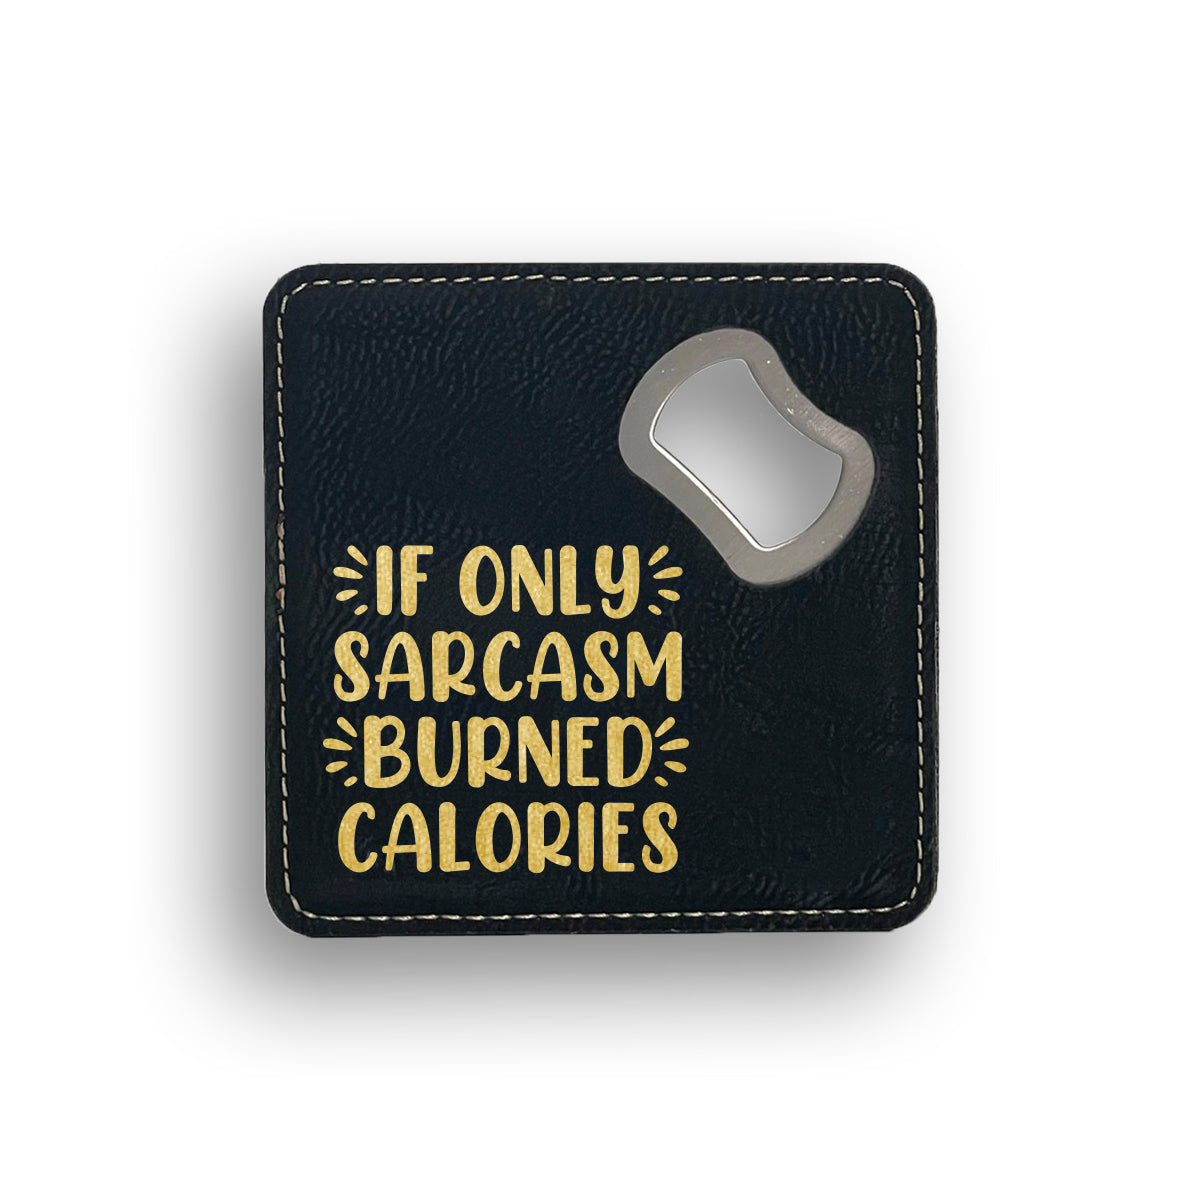 Sarcasm Burned Calories Bottle Opener Coaster